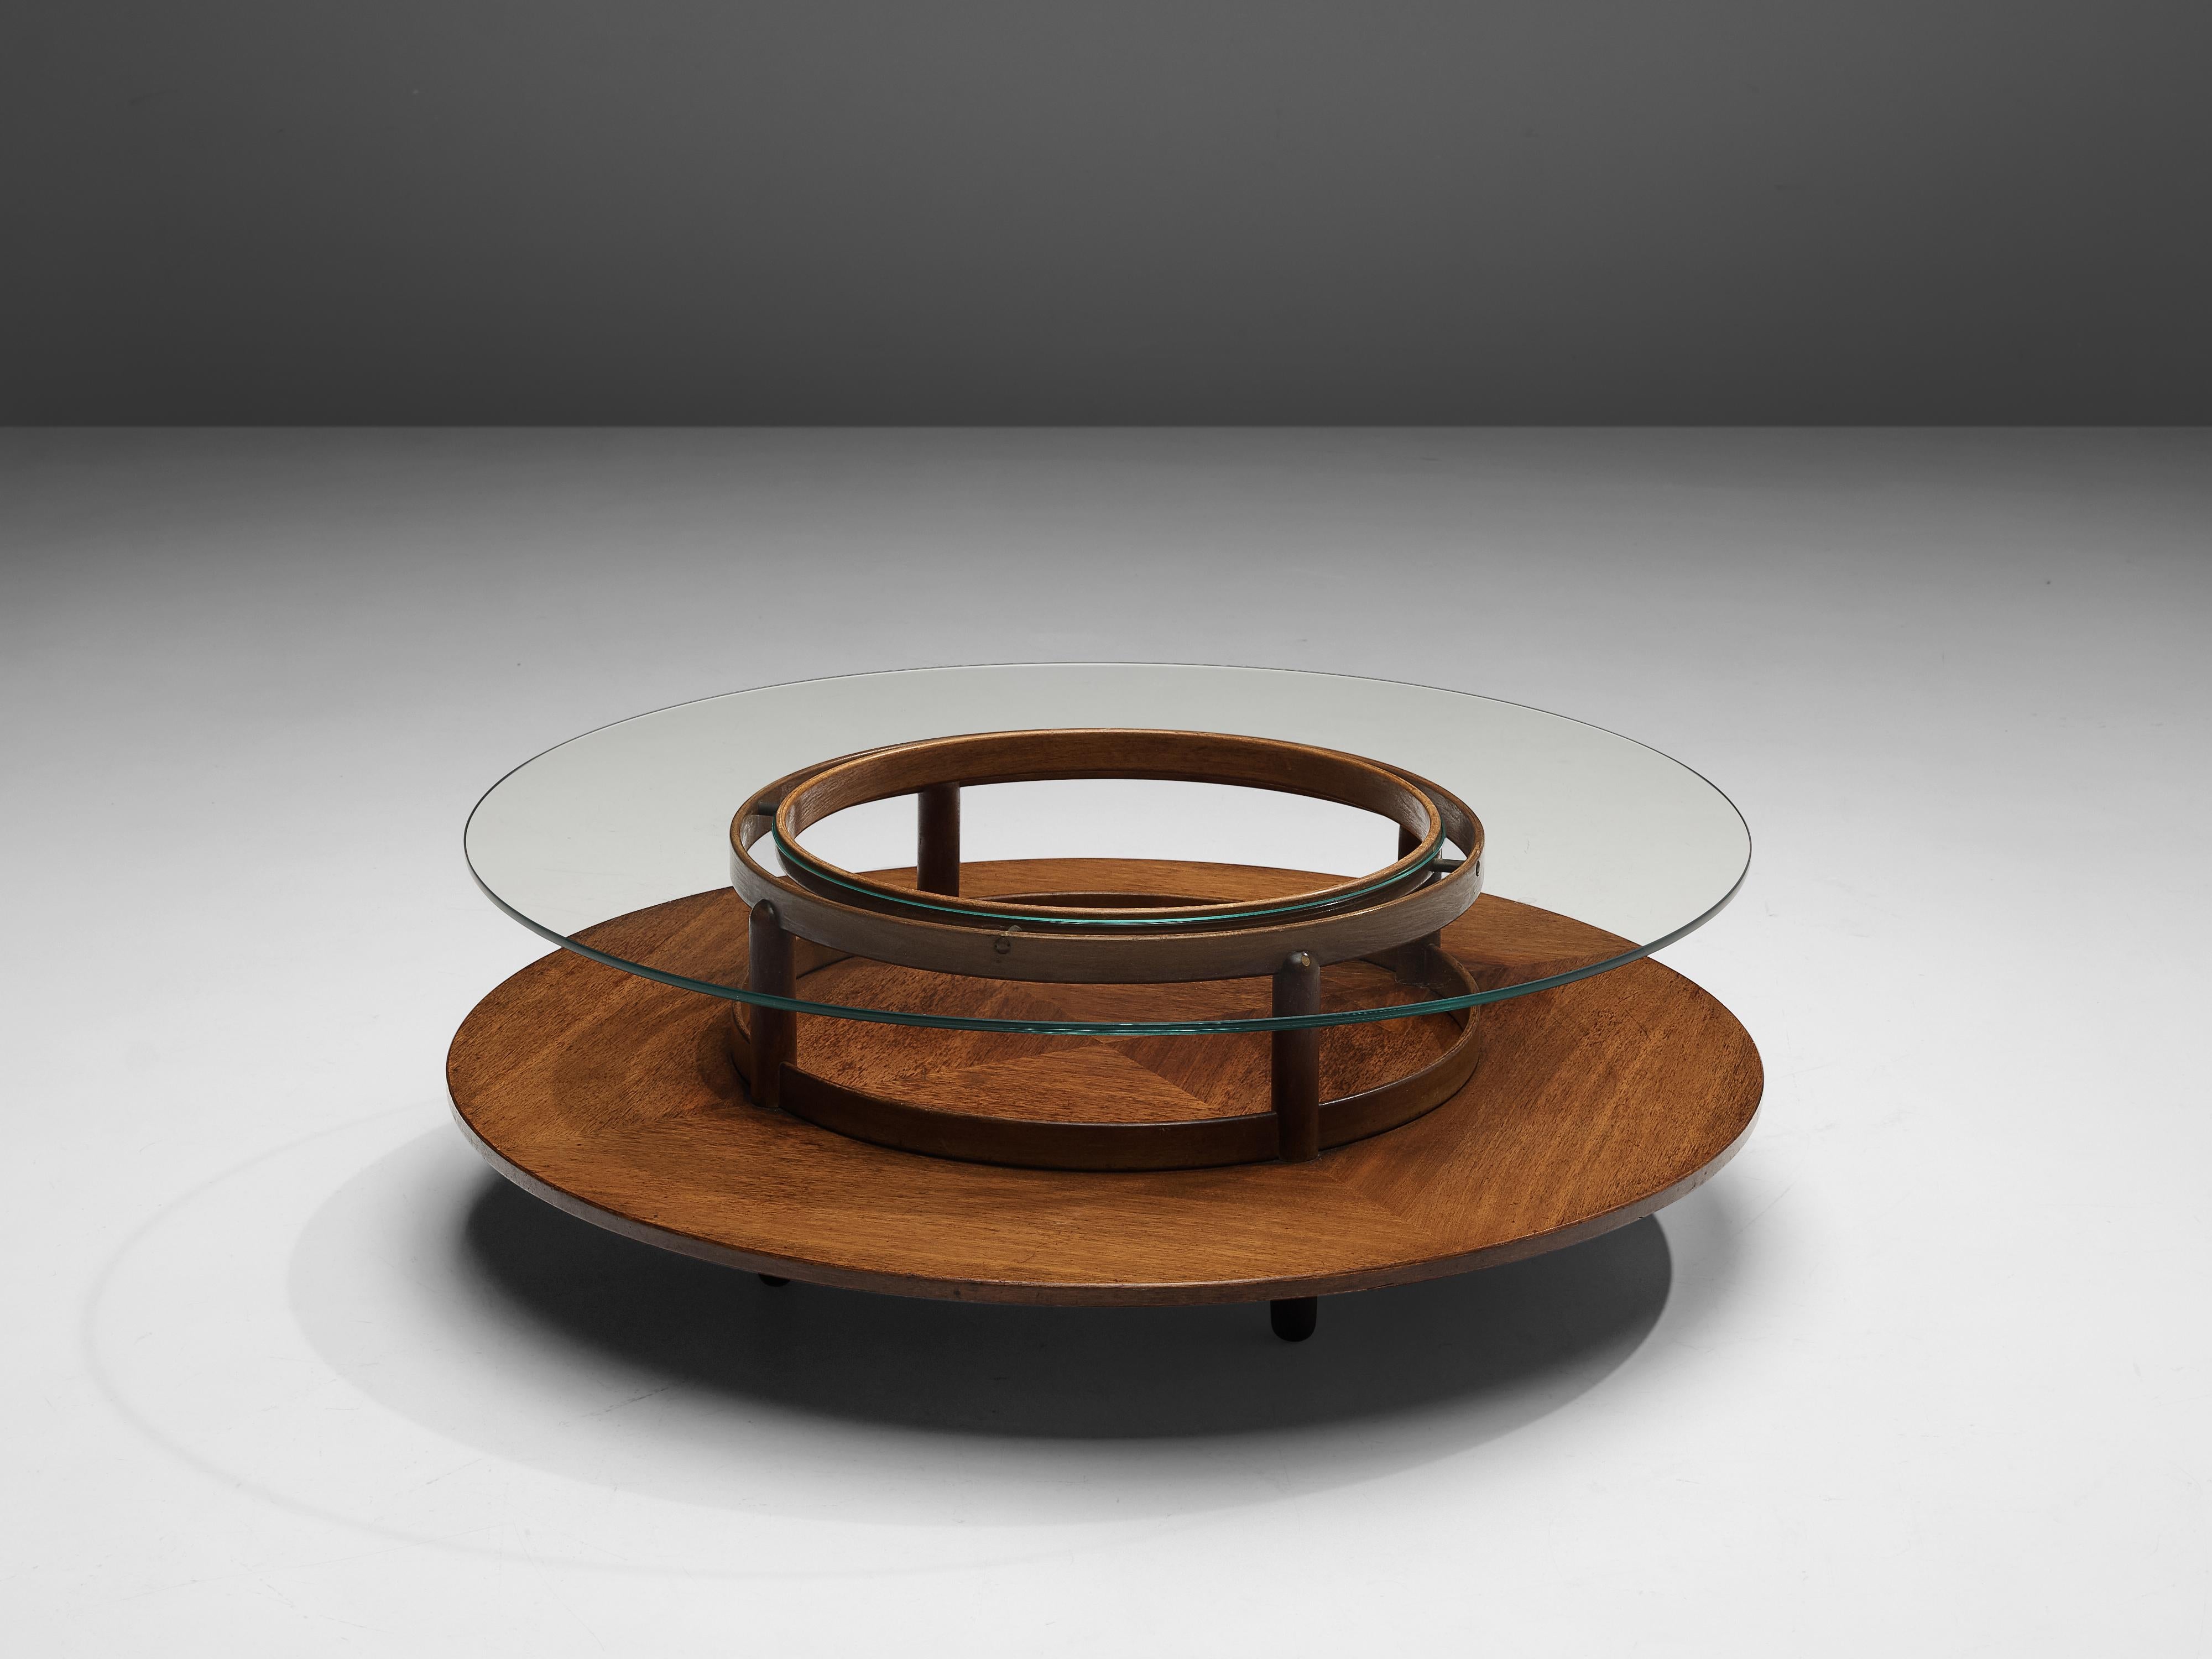 Gianfranco Frattini Round Coffee Table in Walnut and Glass